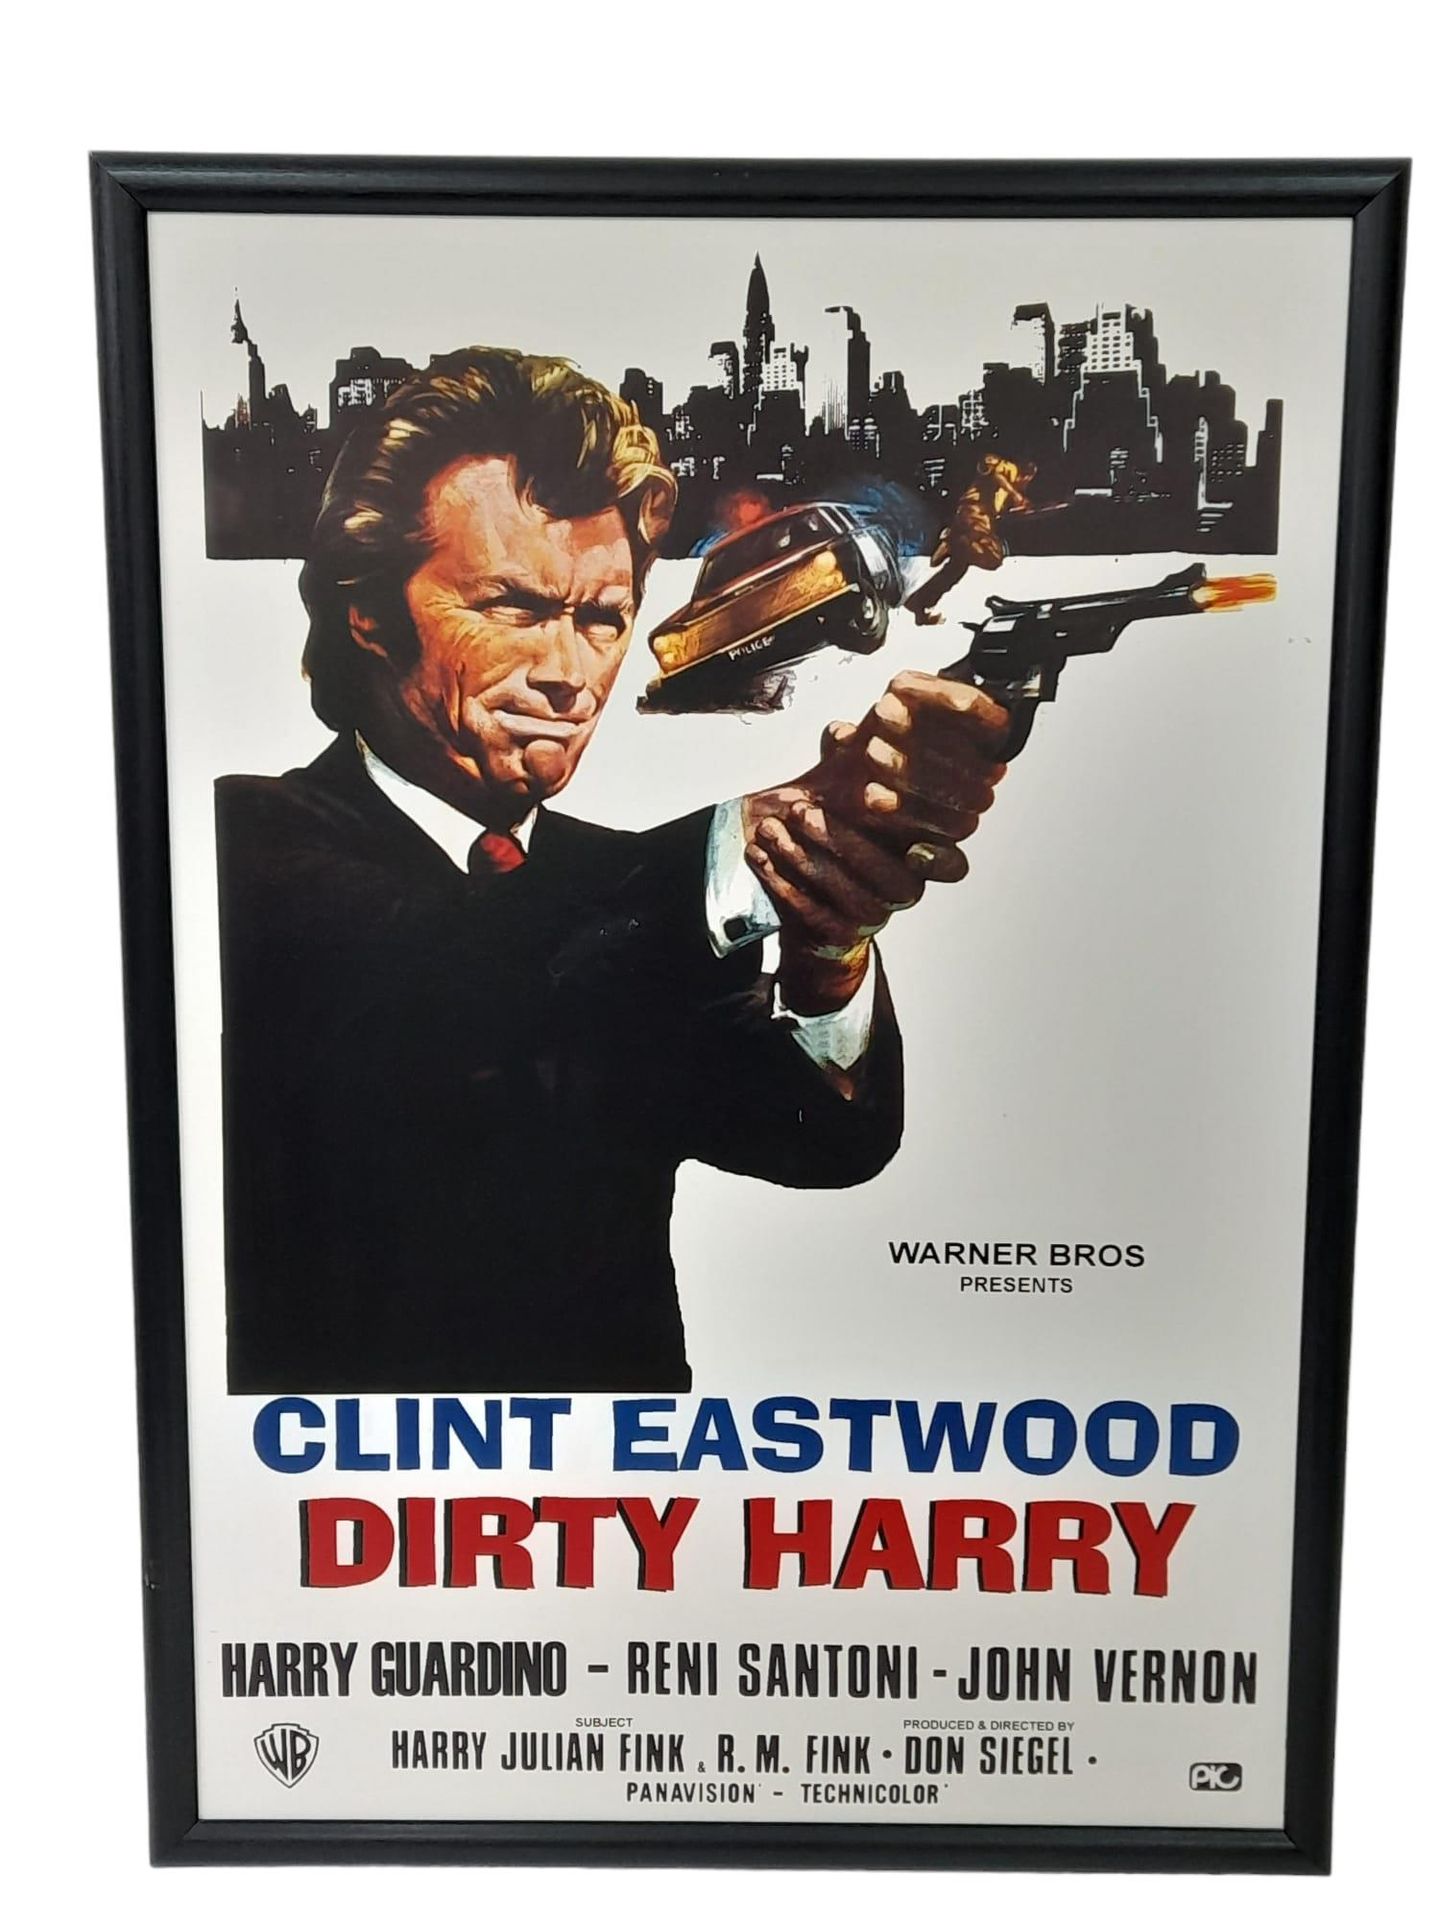 Framed Dirty Harry Movie Poster. San Francisco's maveric…